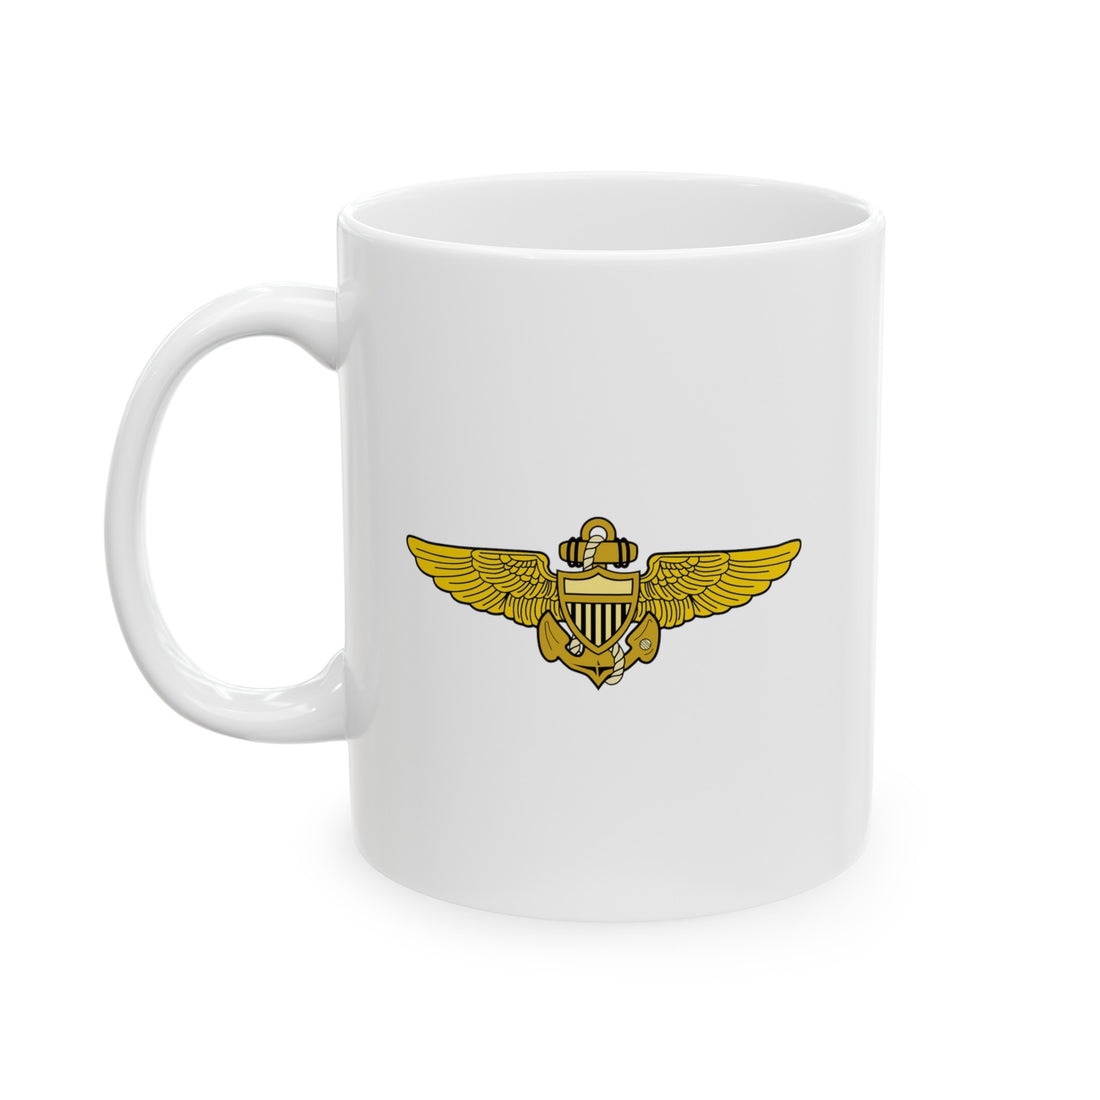 VP-47 "Golden Swordsmen" Aviator Coffee Mug - Navy Maritime Patrol Squadron - Shop Hippysgoodness